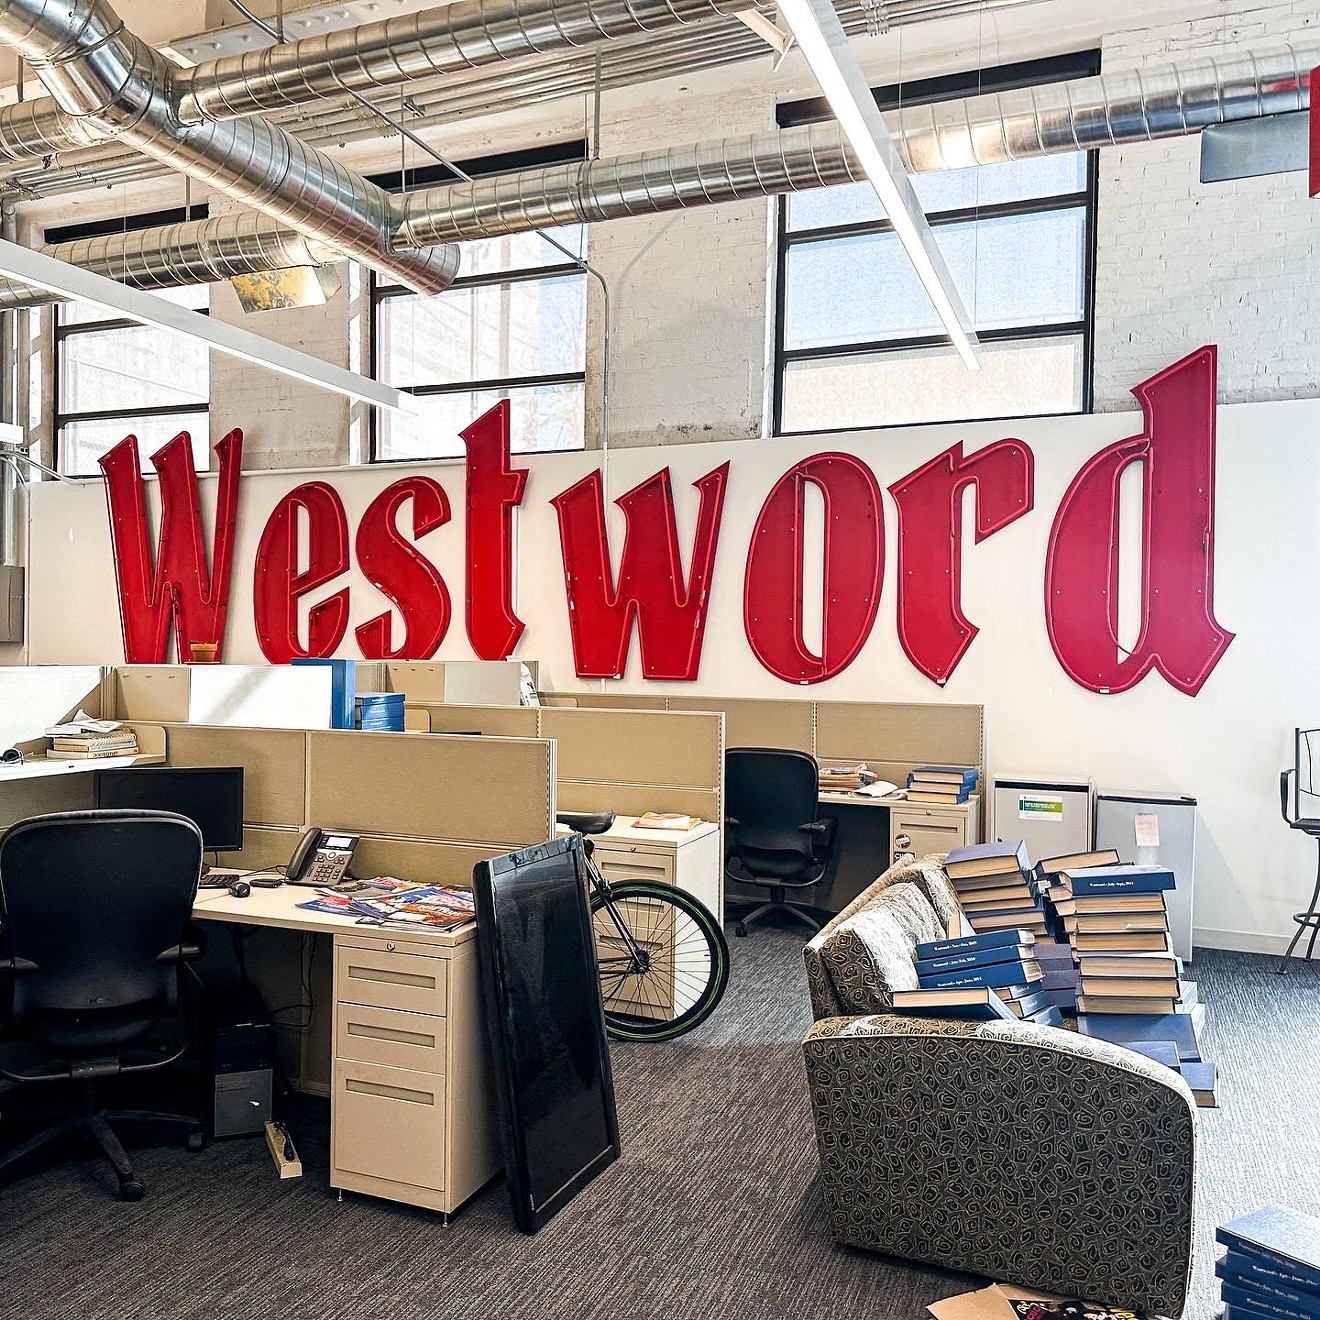 The Denver Westword office at 8 Lincoln Street, Denver, Colorado.